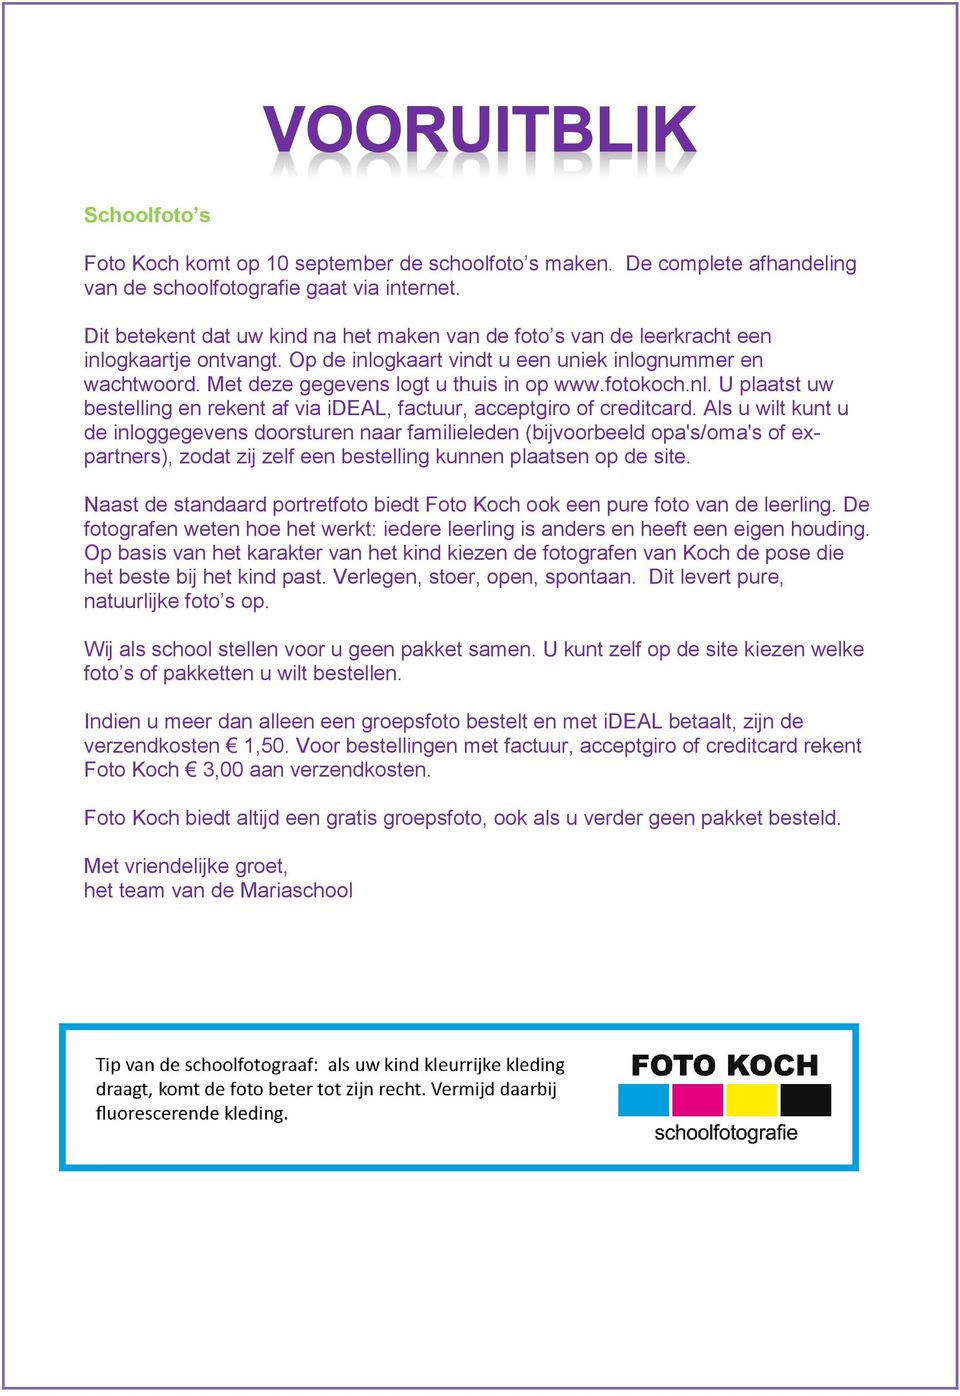 fotokoch.nl. U plaatst uw bestelling en rekent af via ideal, factuur, acceptgiro of creditcard.